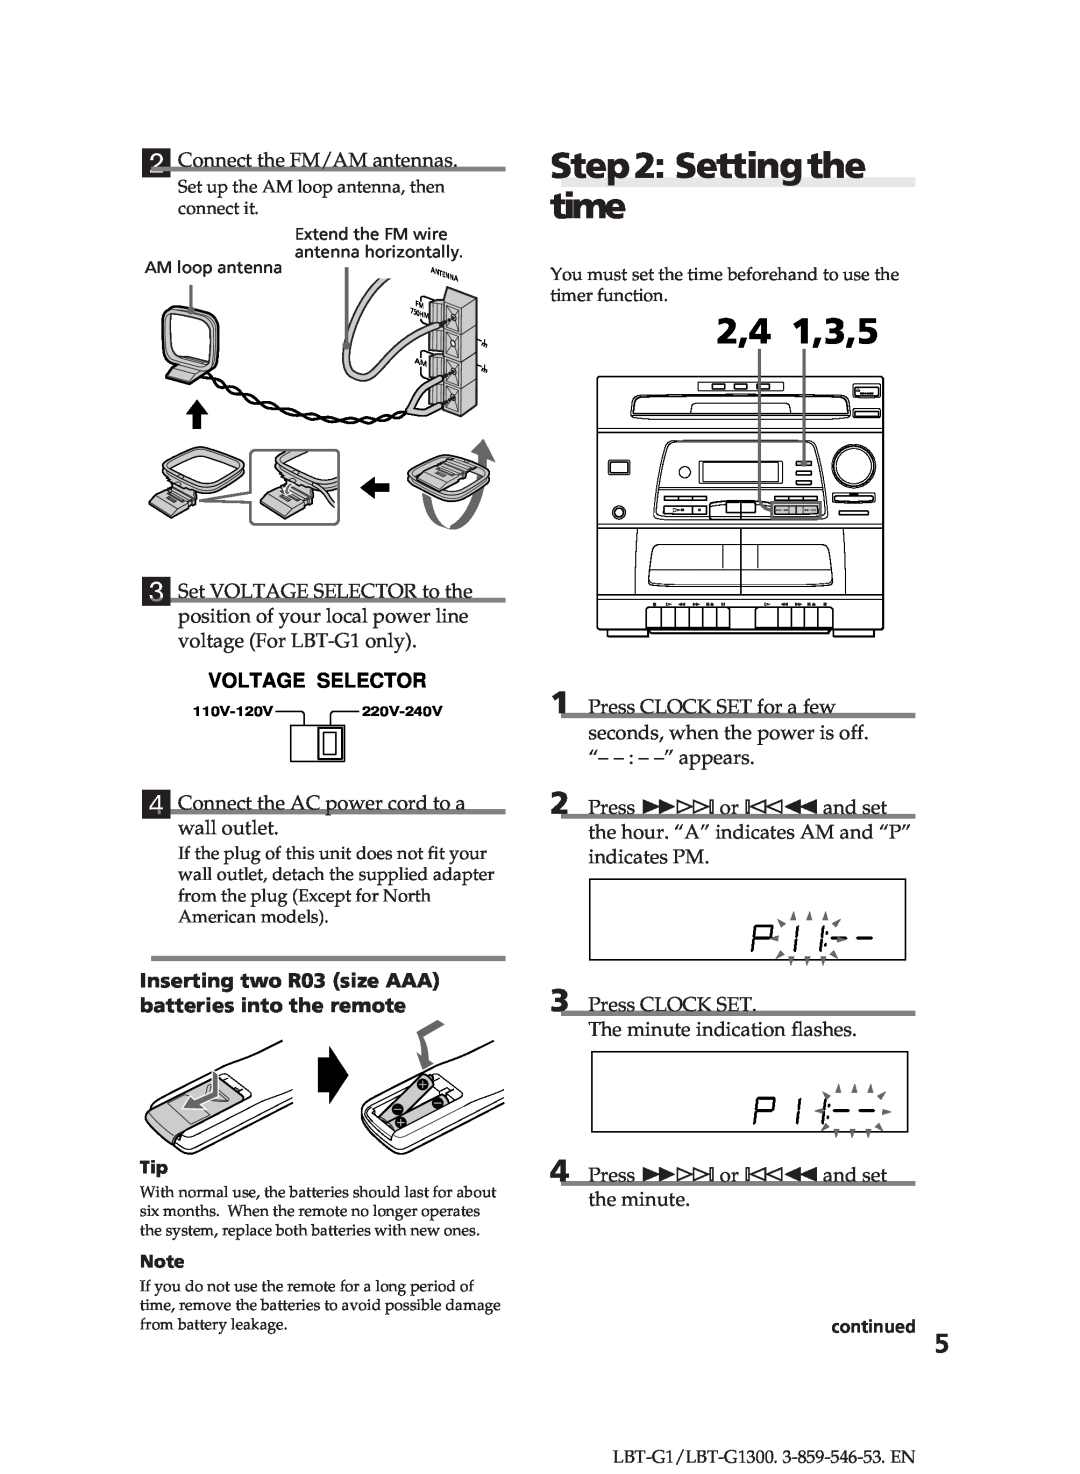 Sony LBT-G1300 manual Settingthe time, 1,3,5, Voltage Selector 